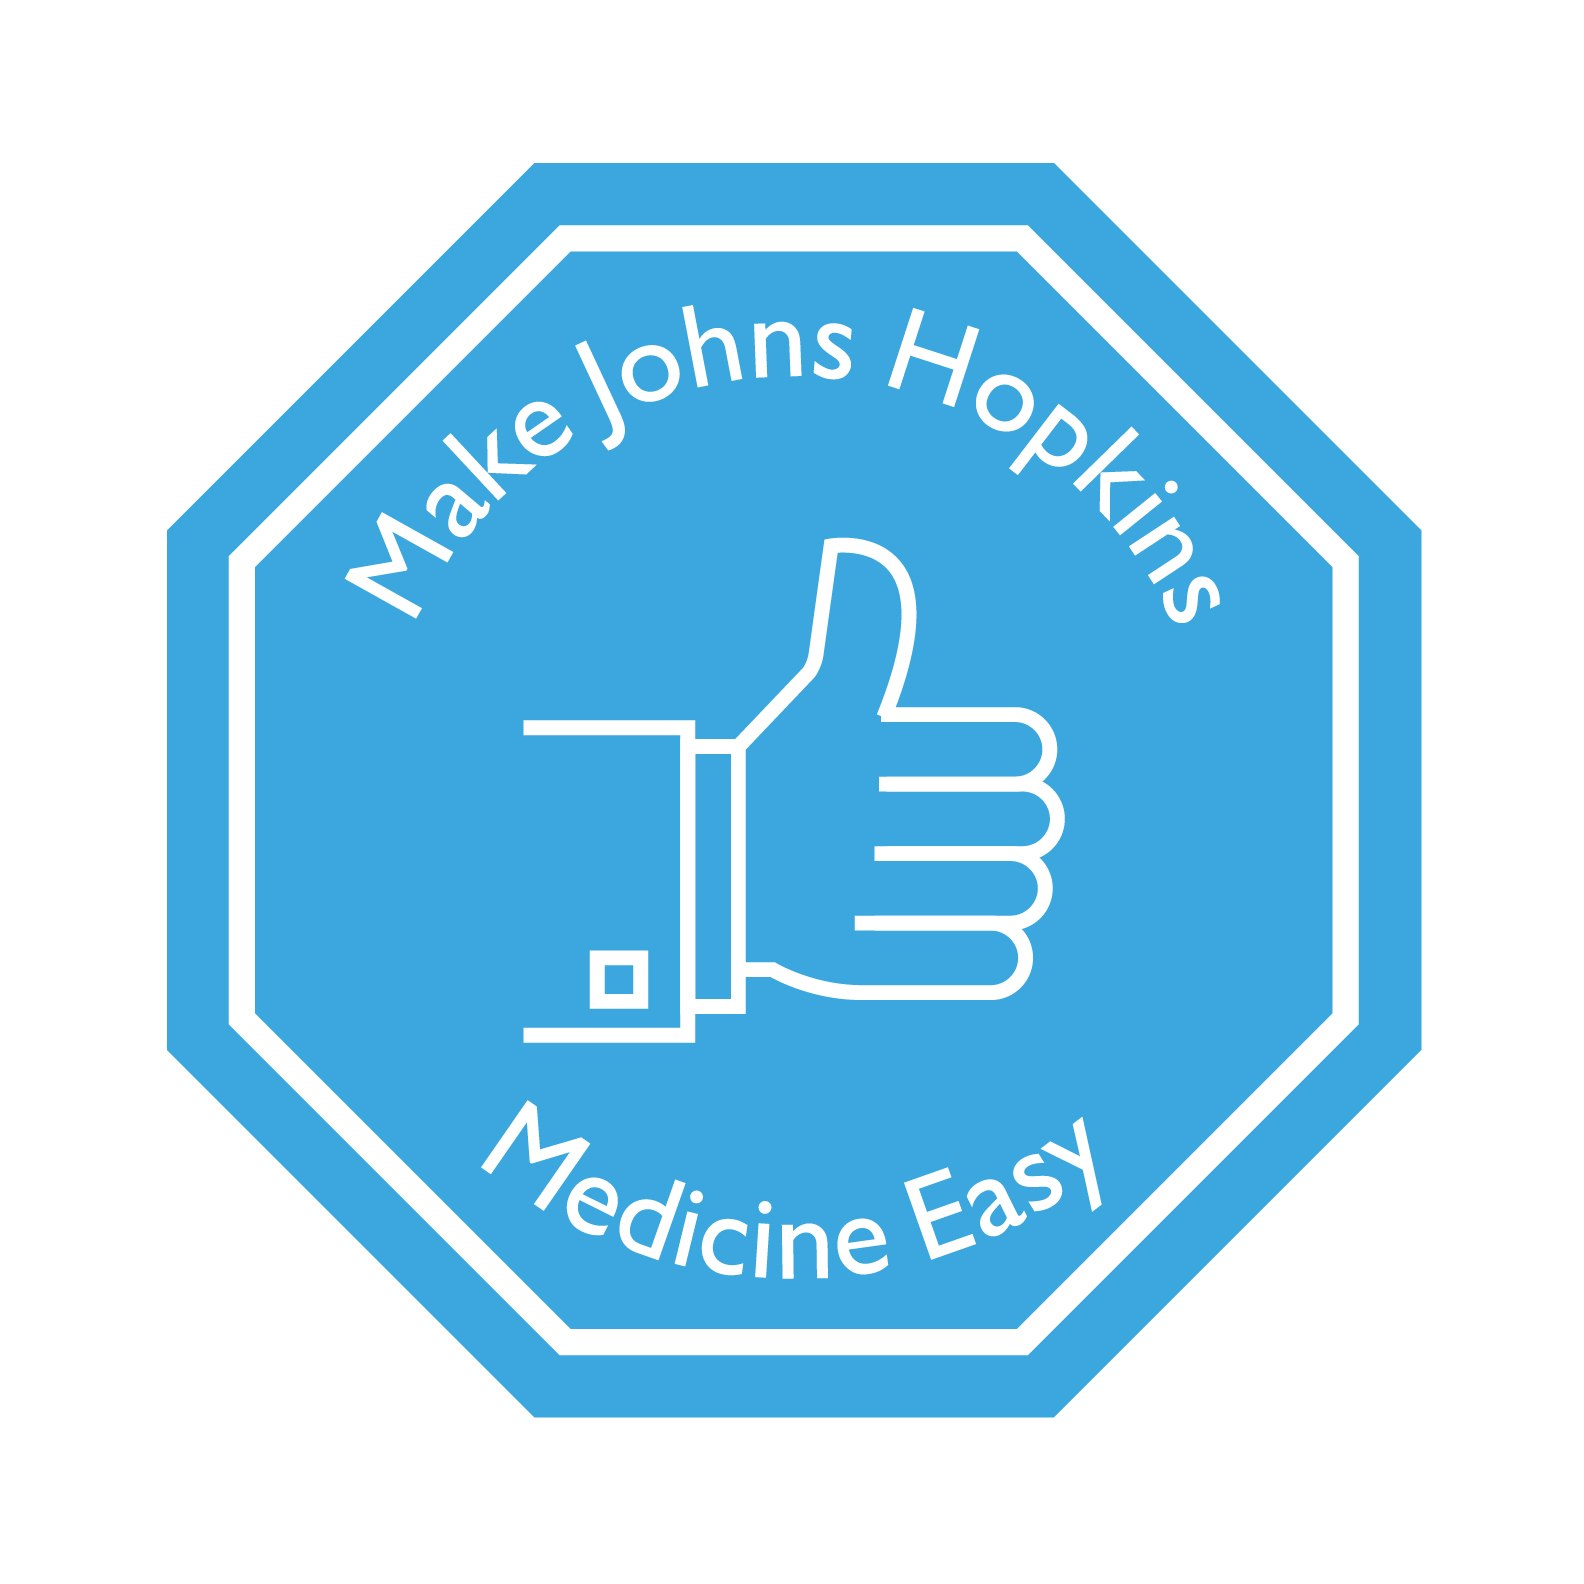 An icon represents Johns Hopkins Medicine's strategic plan priority to Make Johns Hopkins Medicine Easy. 